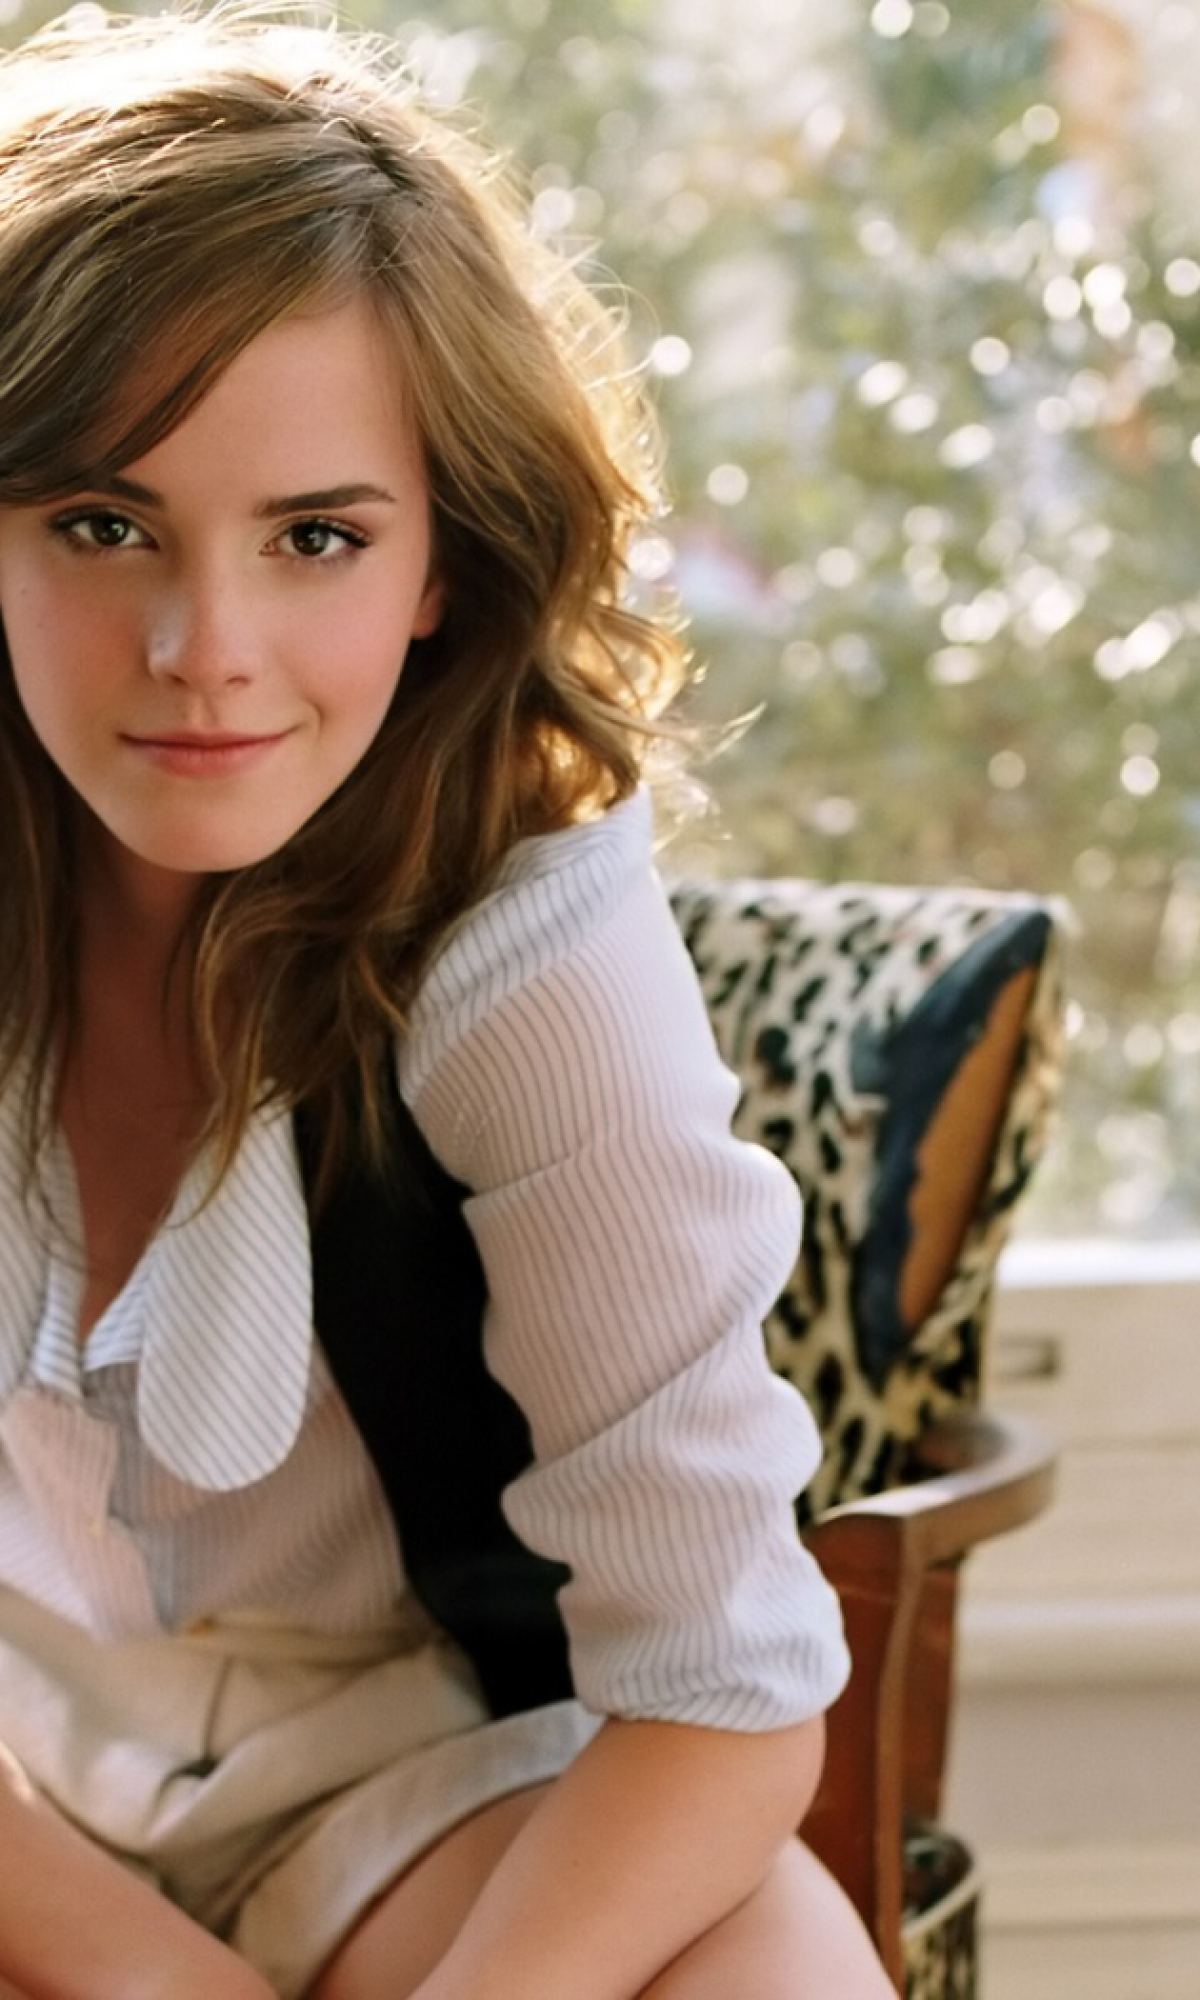 X Resolution Emma Watson Boobs Images X Resolution Wallpaper Wallpapers Den